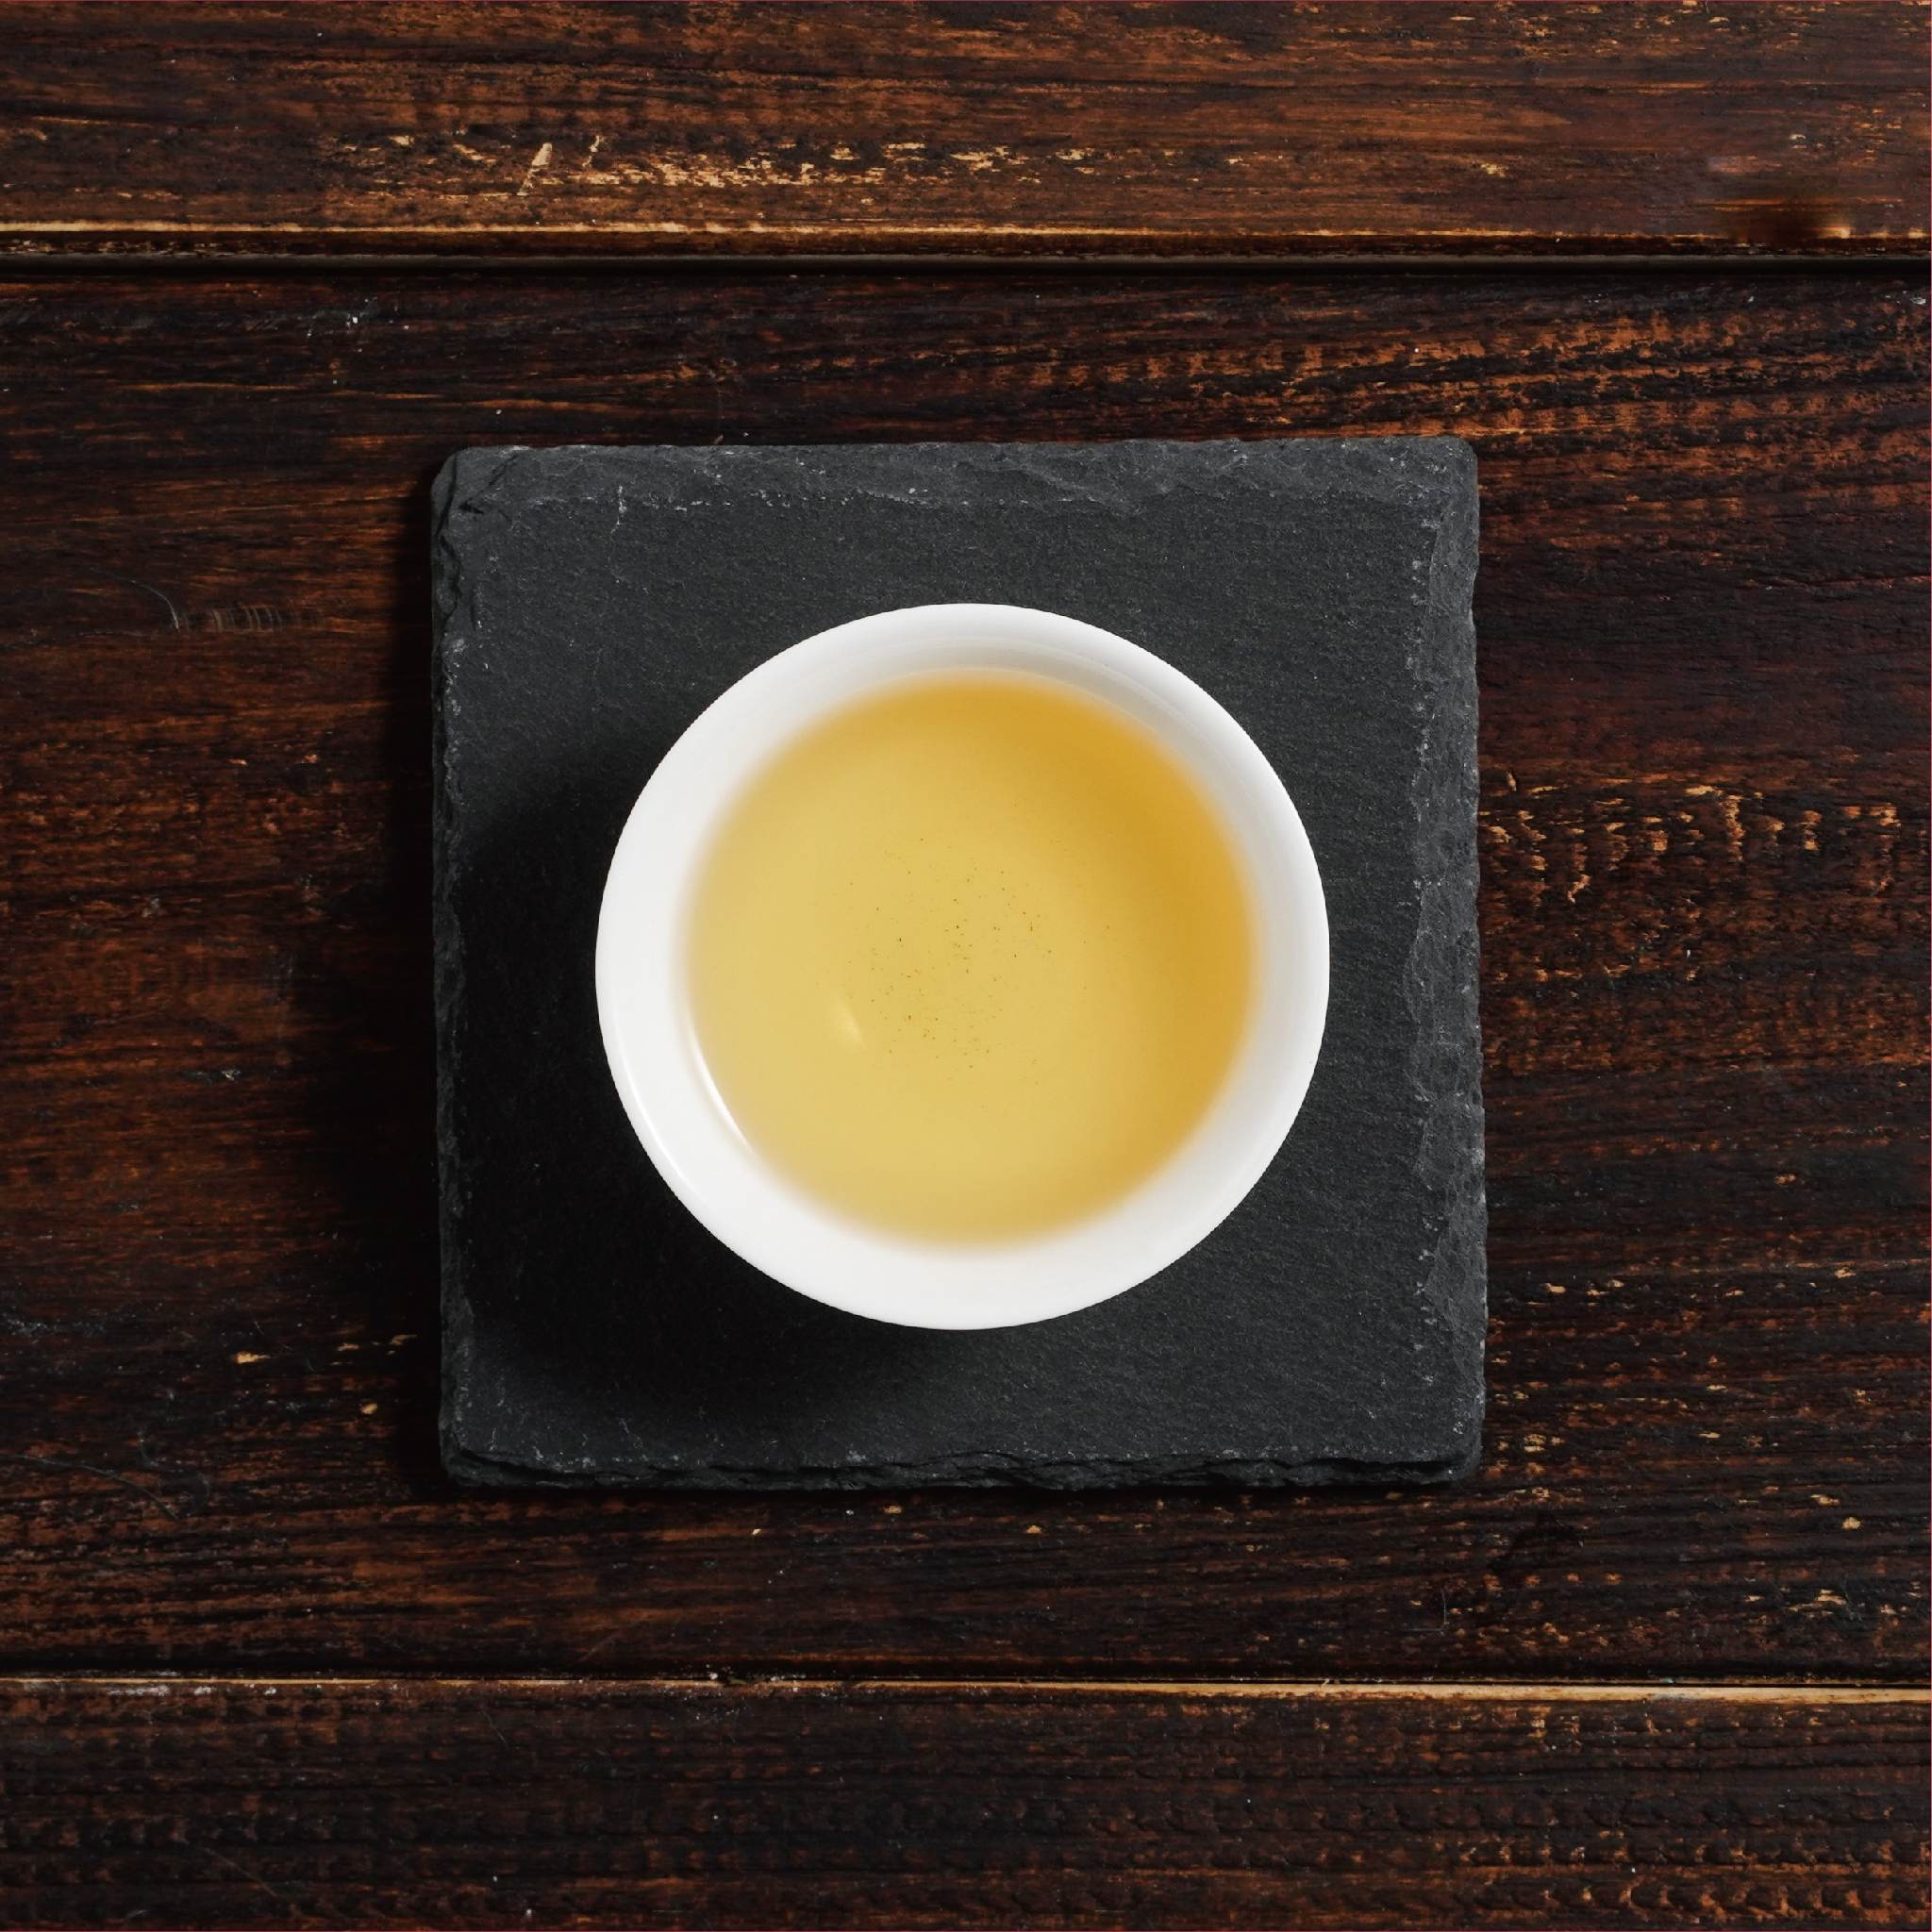 jin xuan golden daylily tea liquor in cup